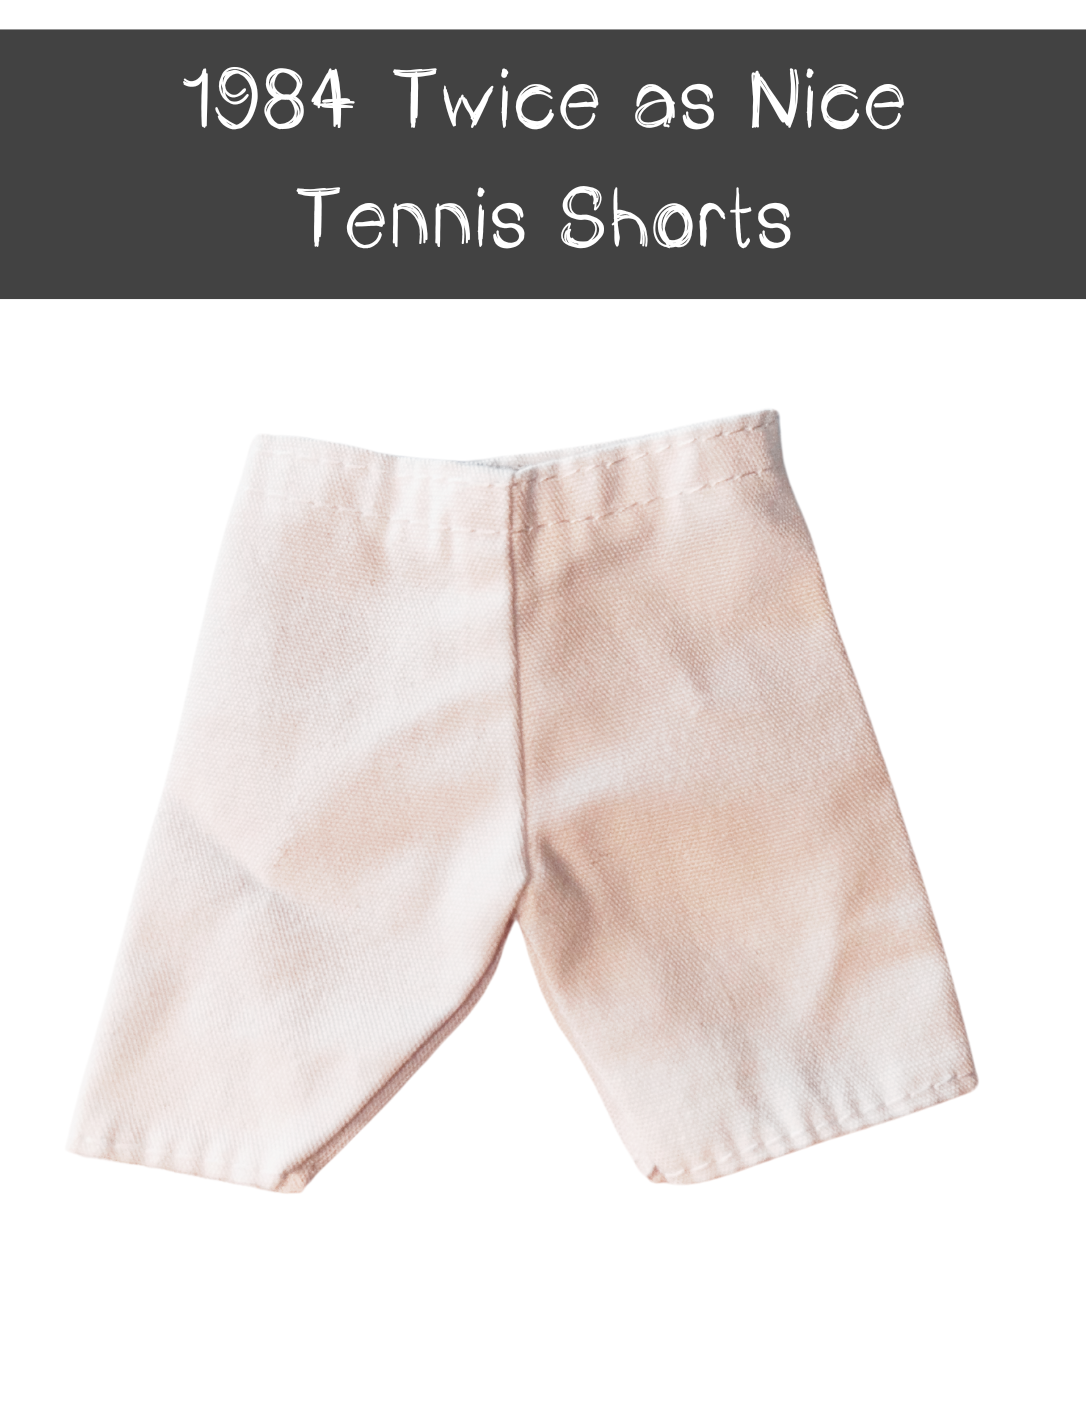 1984 Twice as Nice Tennis Shorts